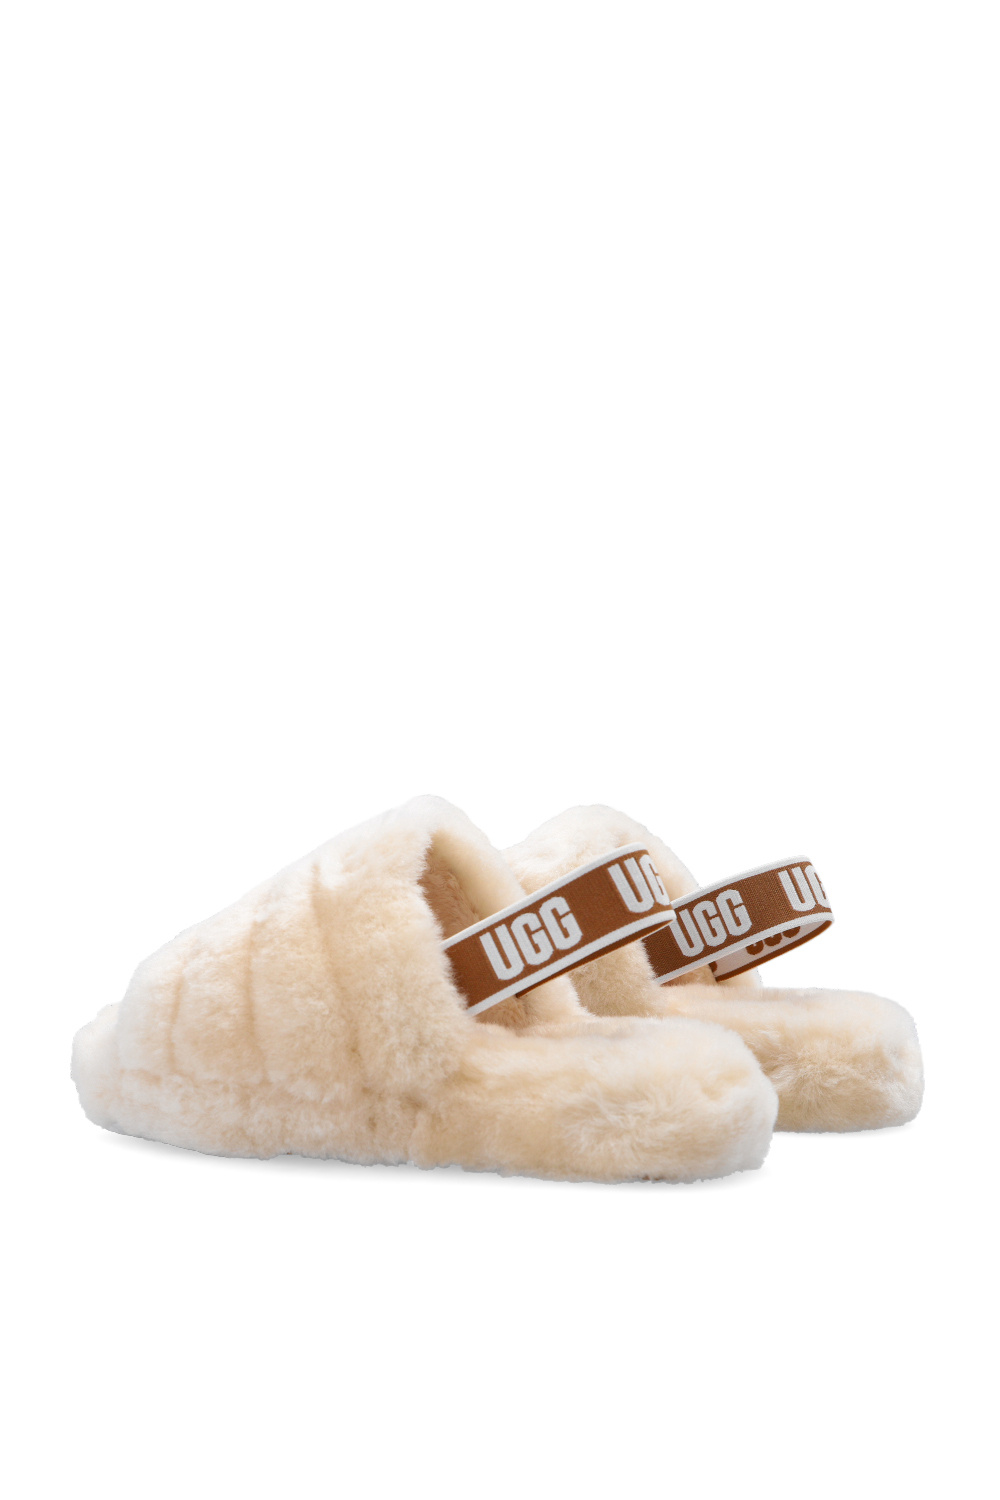 UGG Kids ‘Fluff Yeah Slide’ sandals